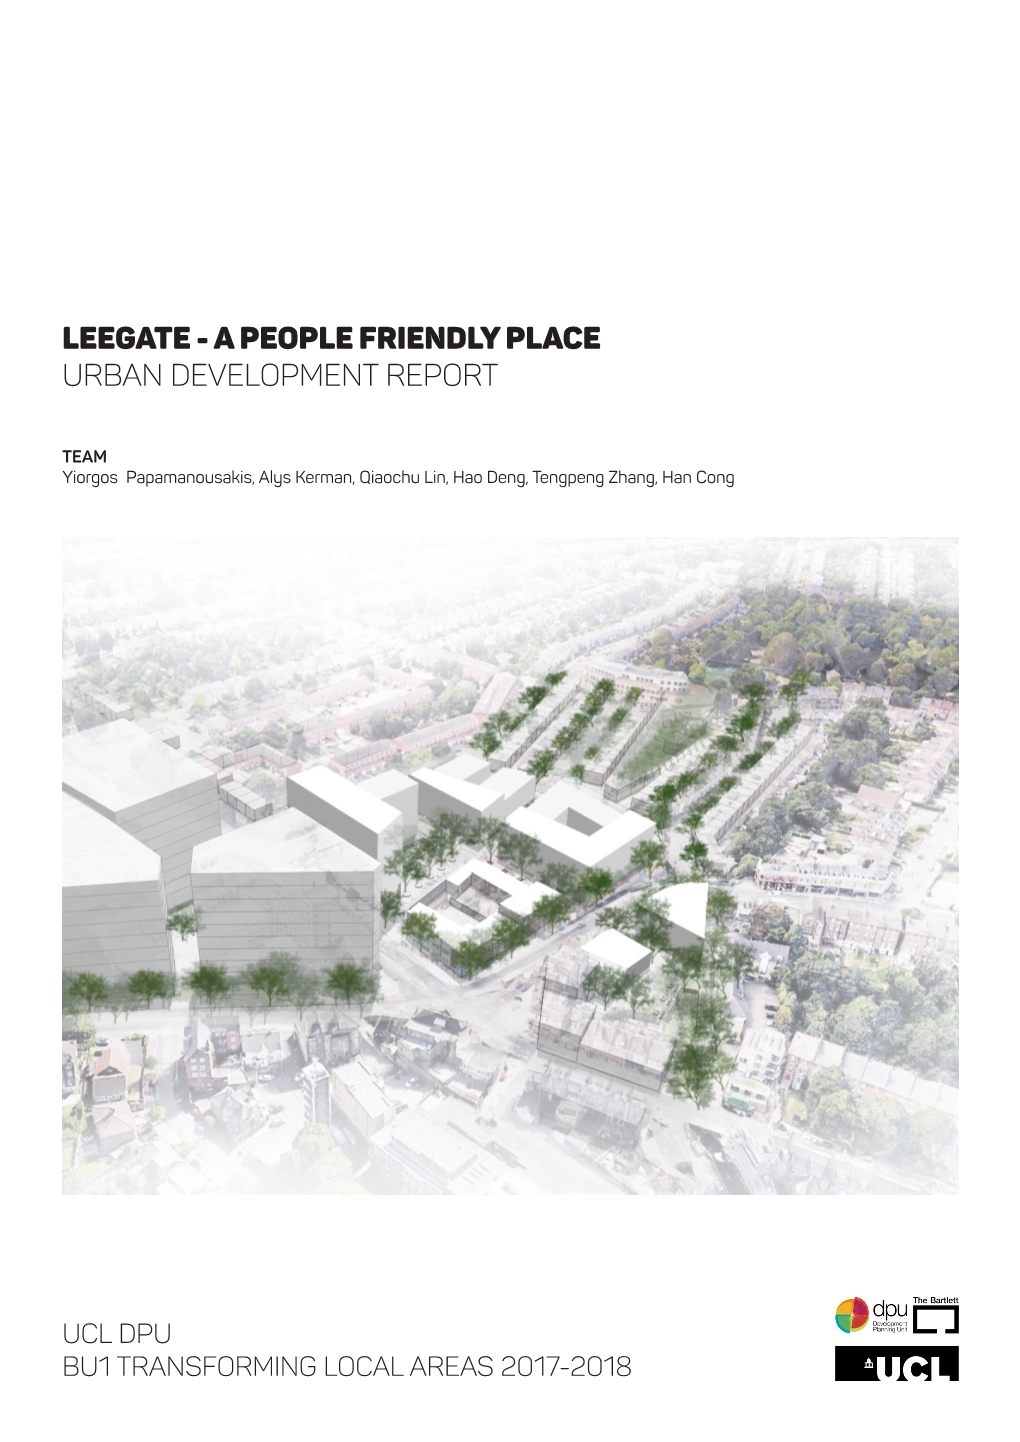 Leegate - a People Friendly Place Urban Development Report